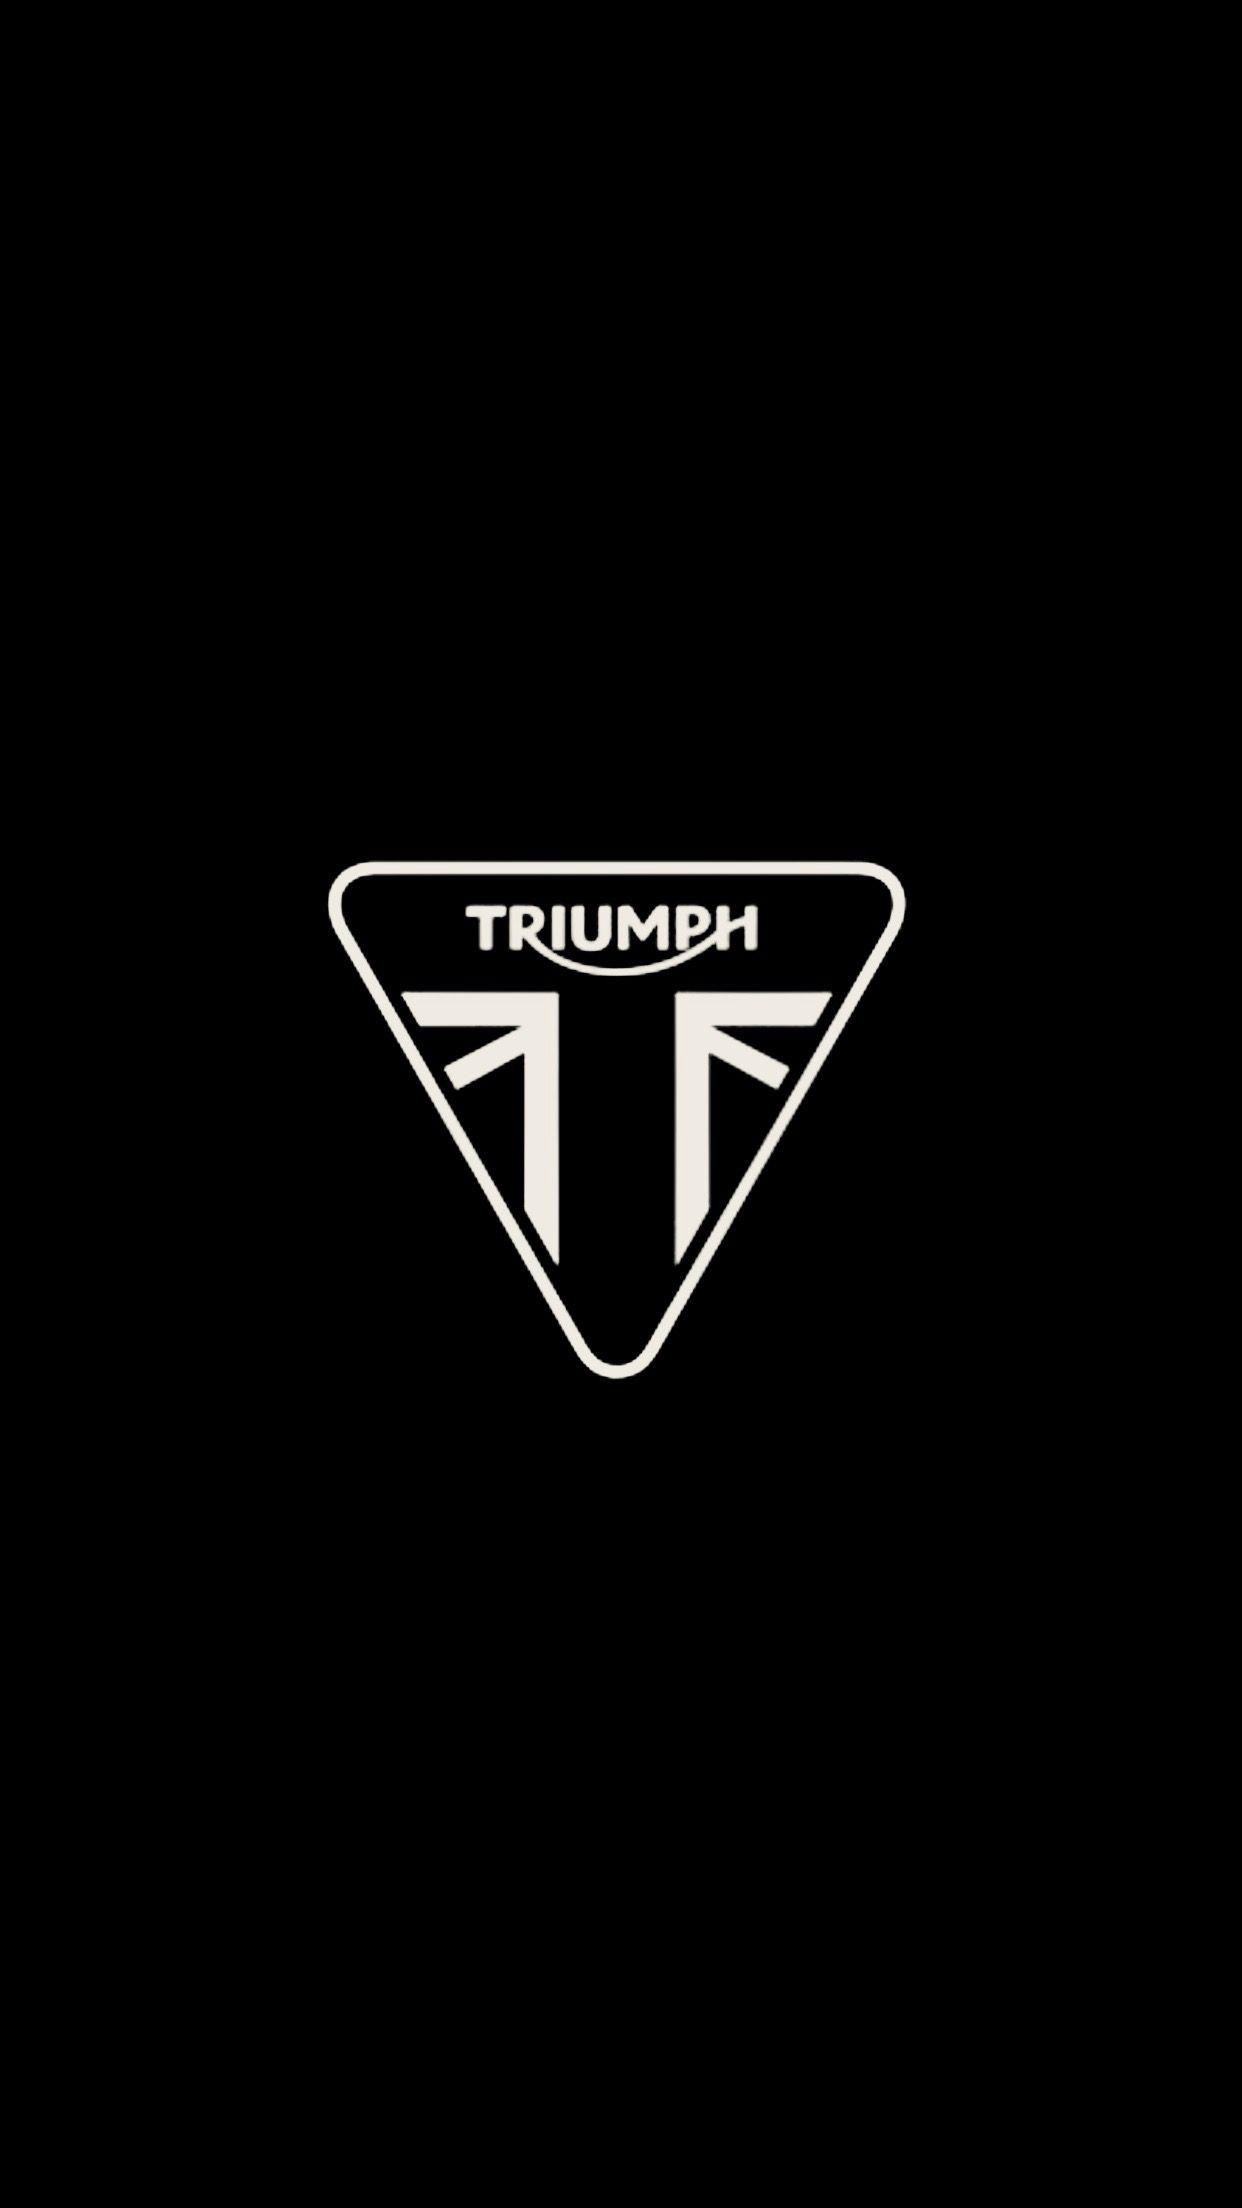 Triumph LOGO # Wallpaper. Triumph logo, Triumph motorcycles